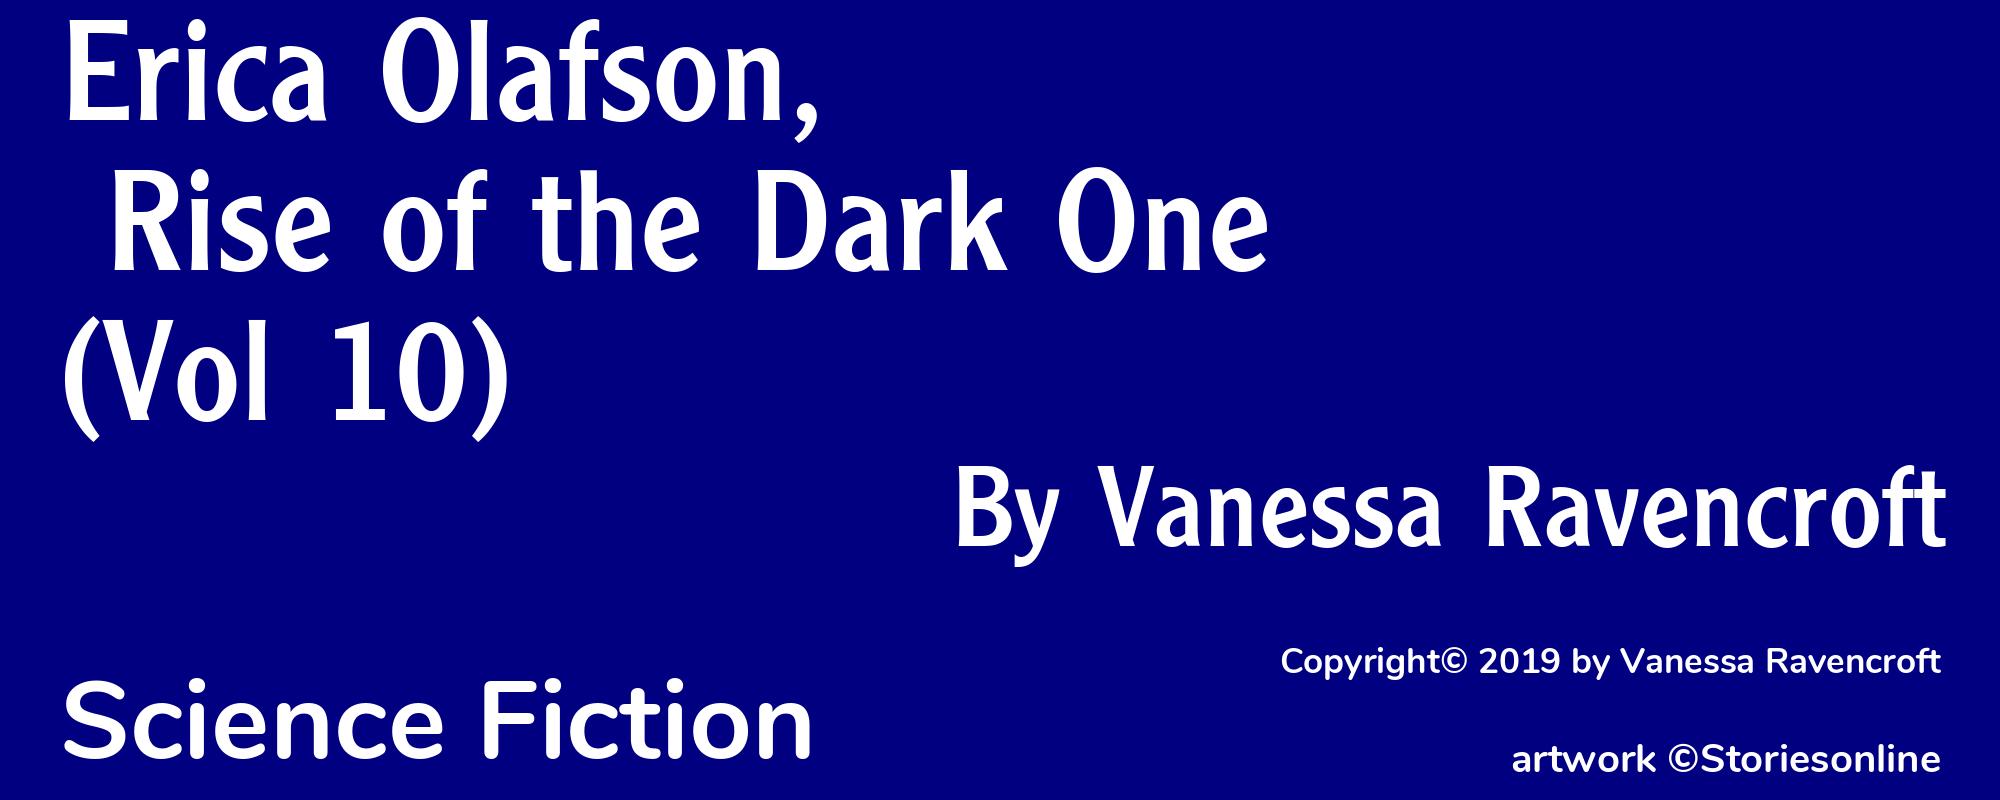 Erica Olafson, Rise of the Dark One (Vol 10) - Cover